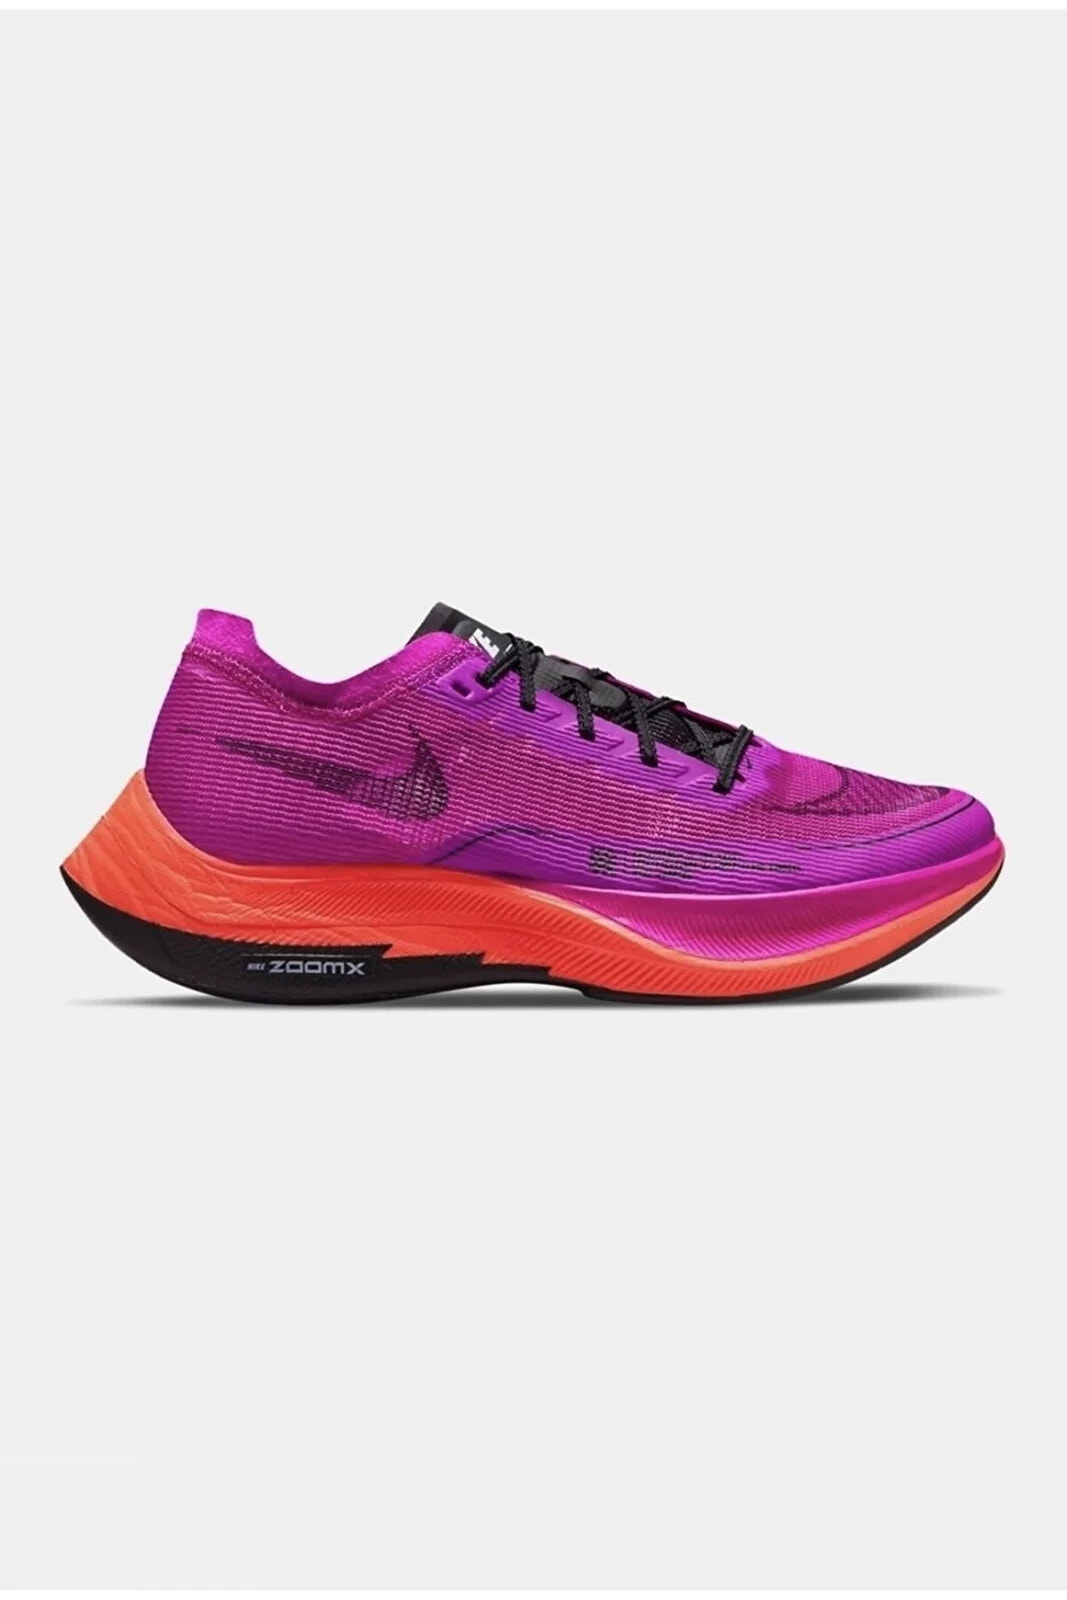 Womens Nike Zoomx Vaporfly Next% 2 Running Shoes NDD SPORT